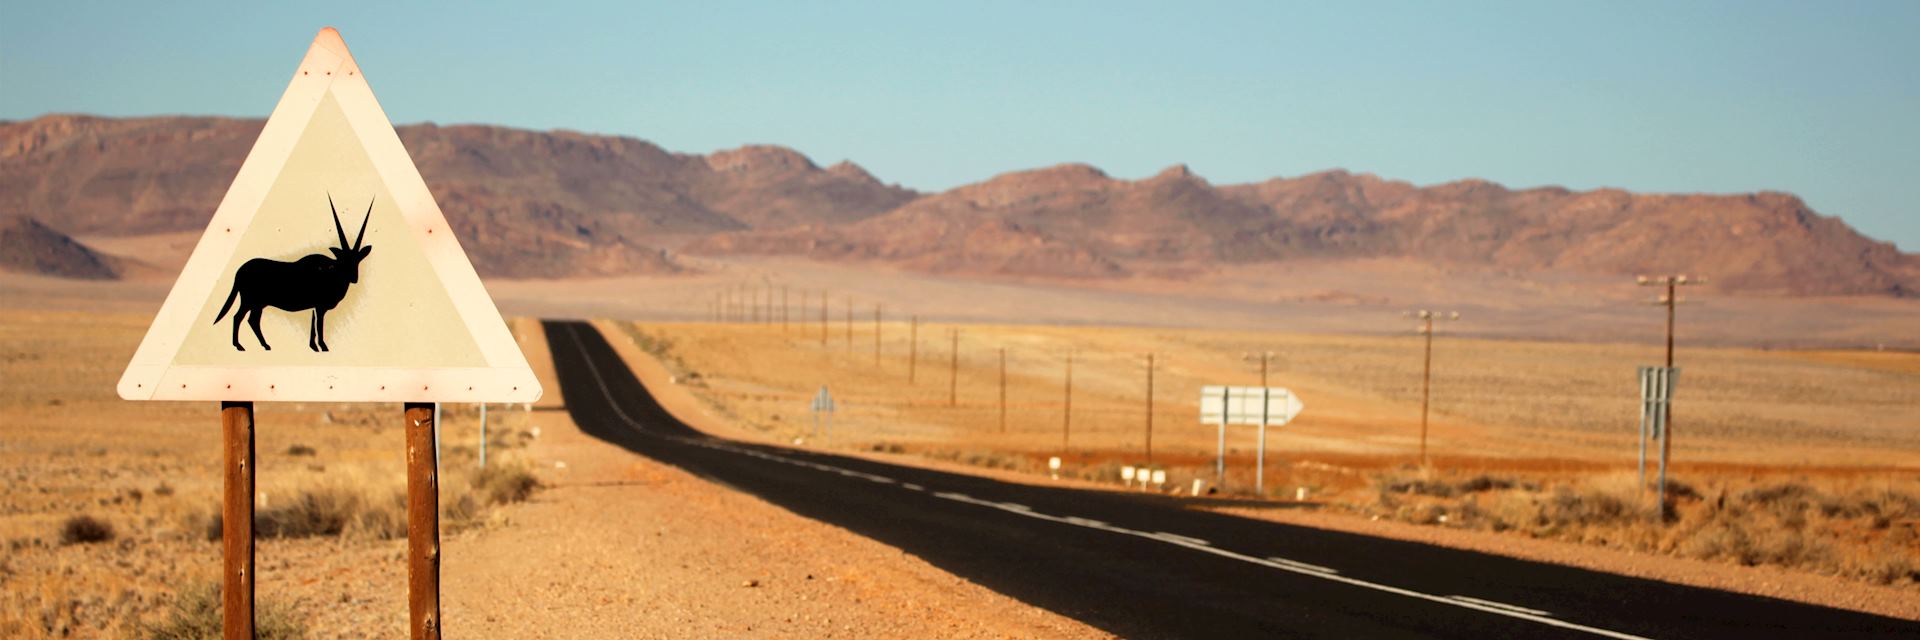 Tar road in Namibia